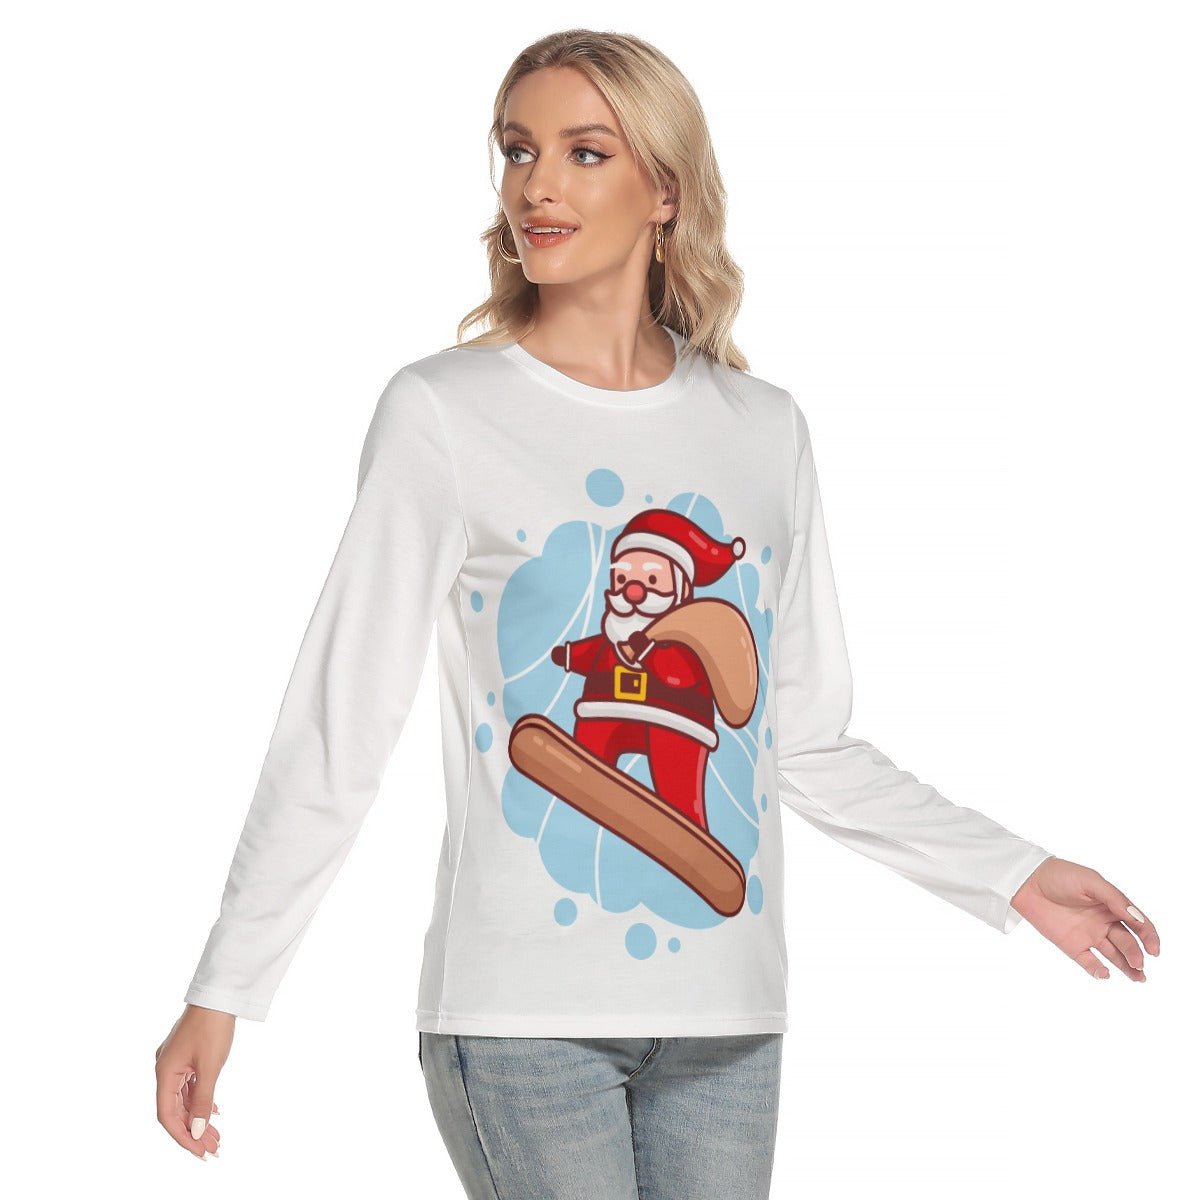 Women's Long Sleeve Christmas T-shirt - Santa Snowboarder - Festive Style